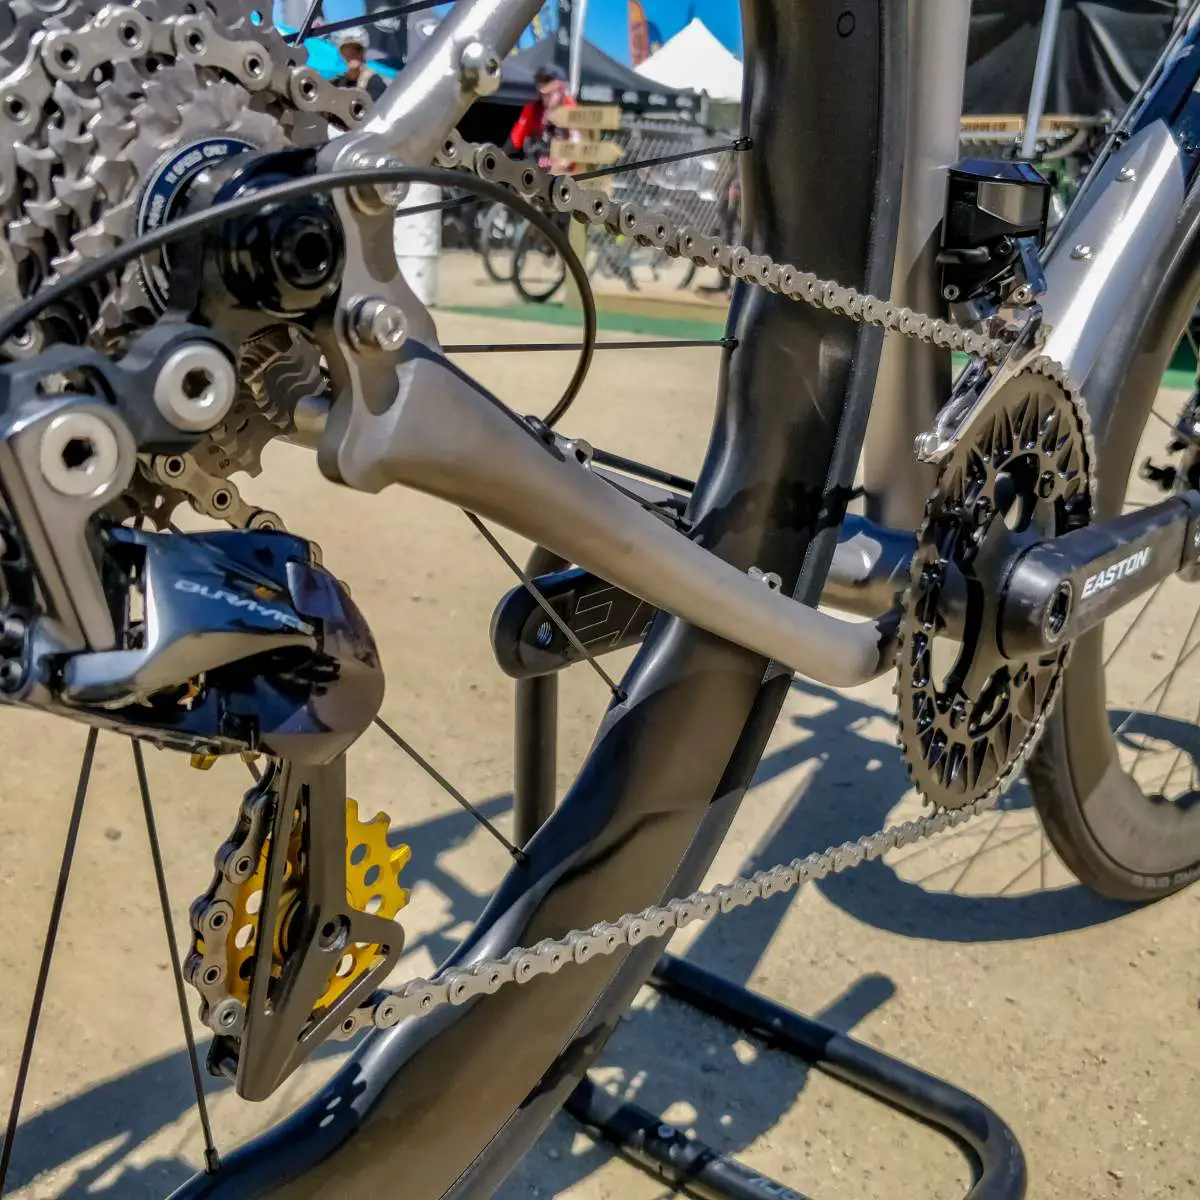 t-lab x3 gravel bike review